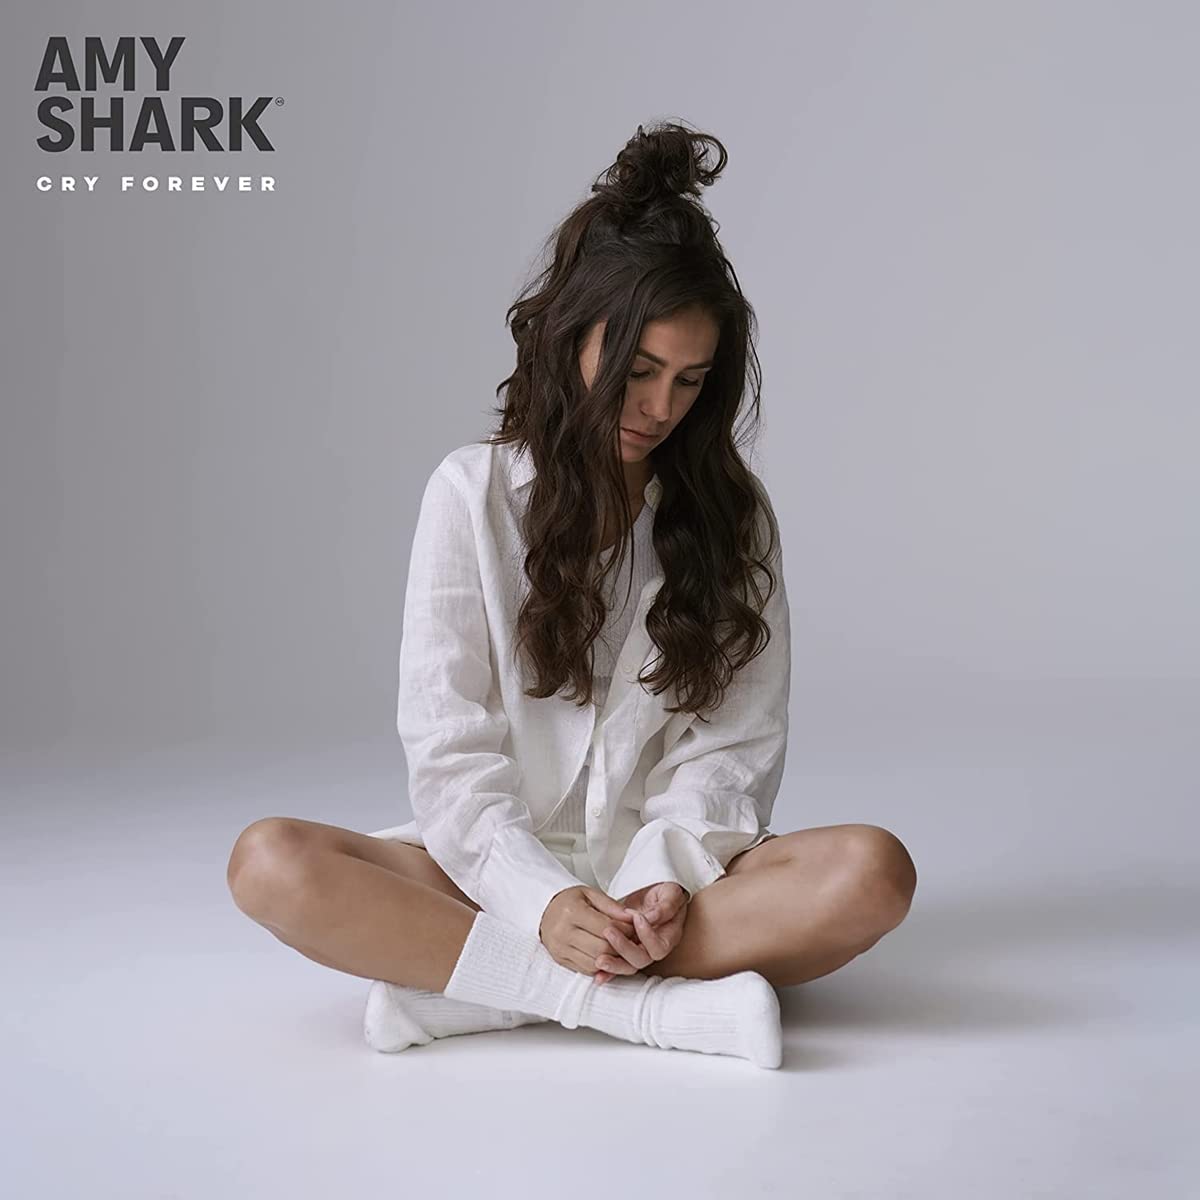 Amy Shark - Cry Forever (Vinyl LP)